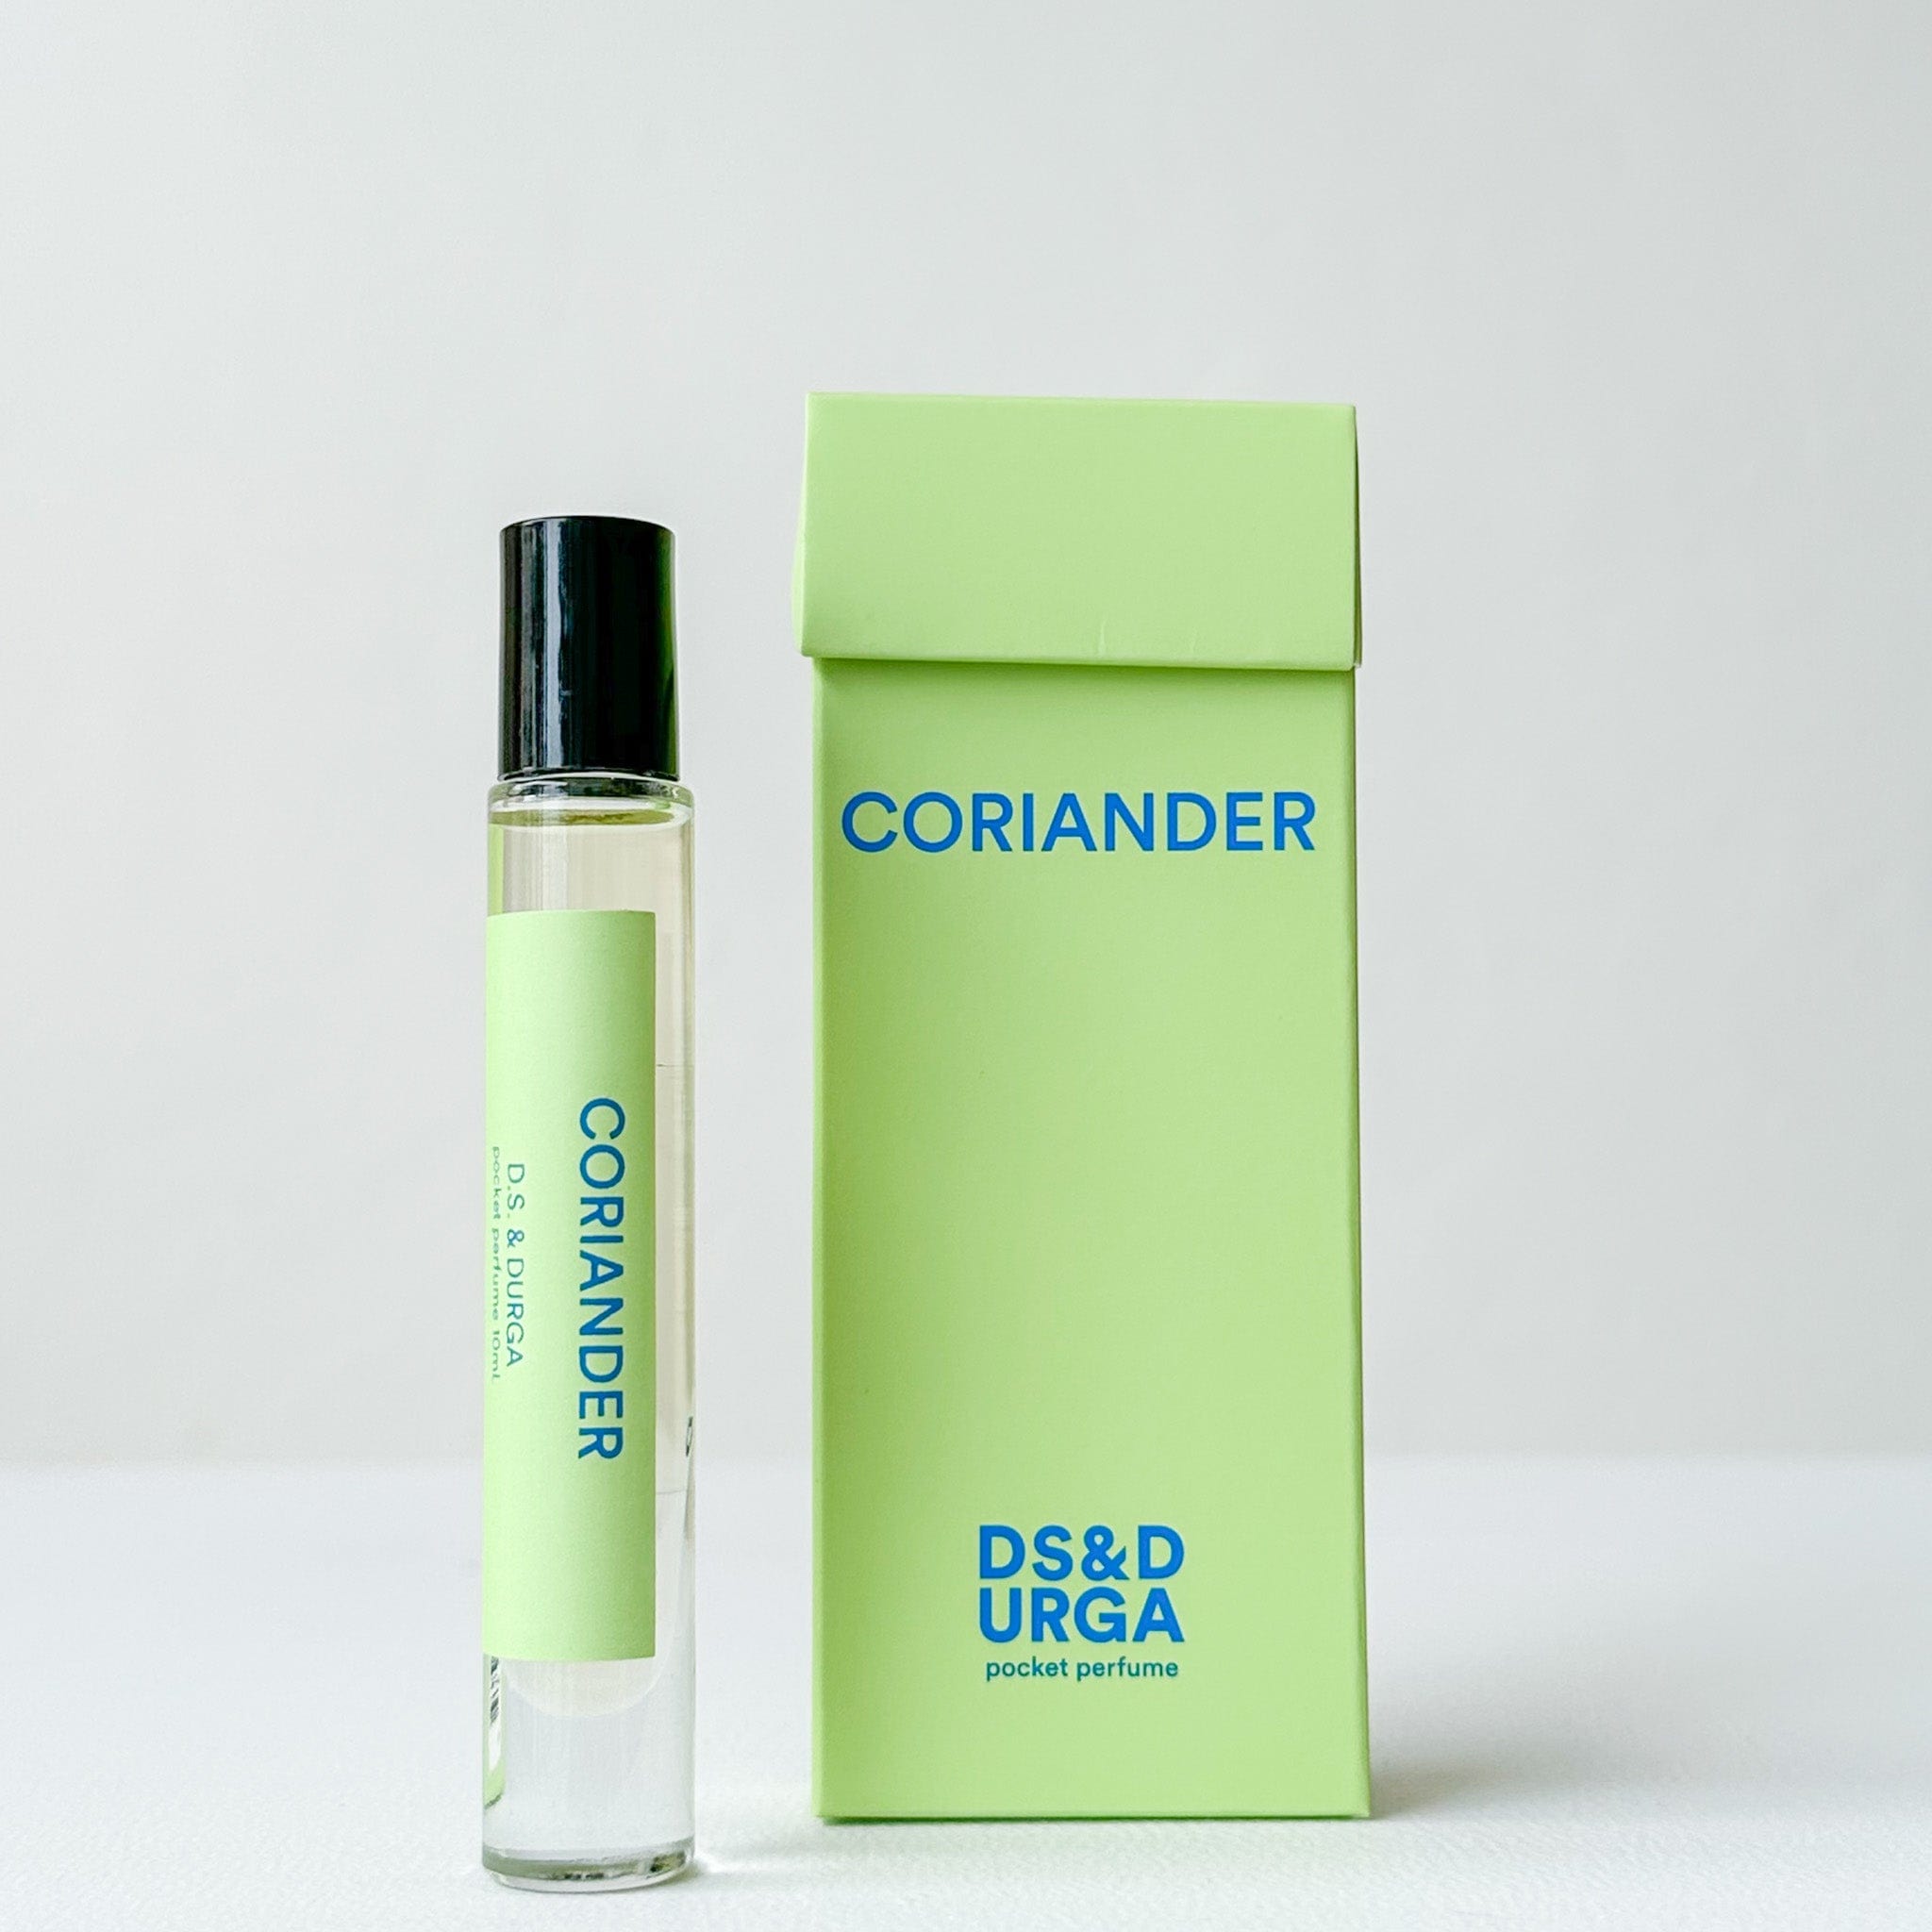 DS DURGA Apothecary Coriander: D.S. & DURGA Pocket Perfume Oil